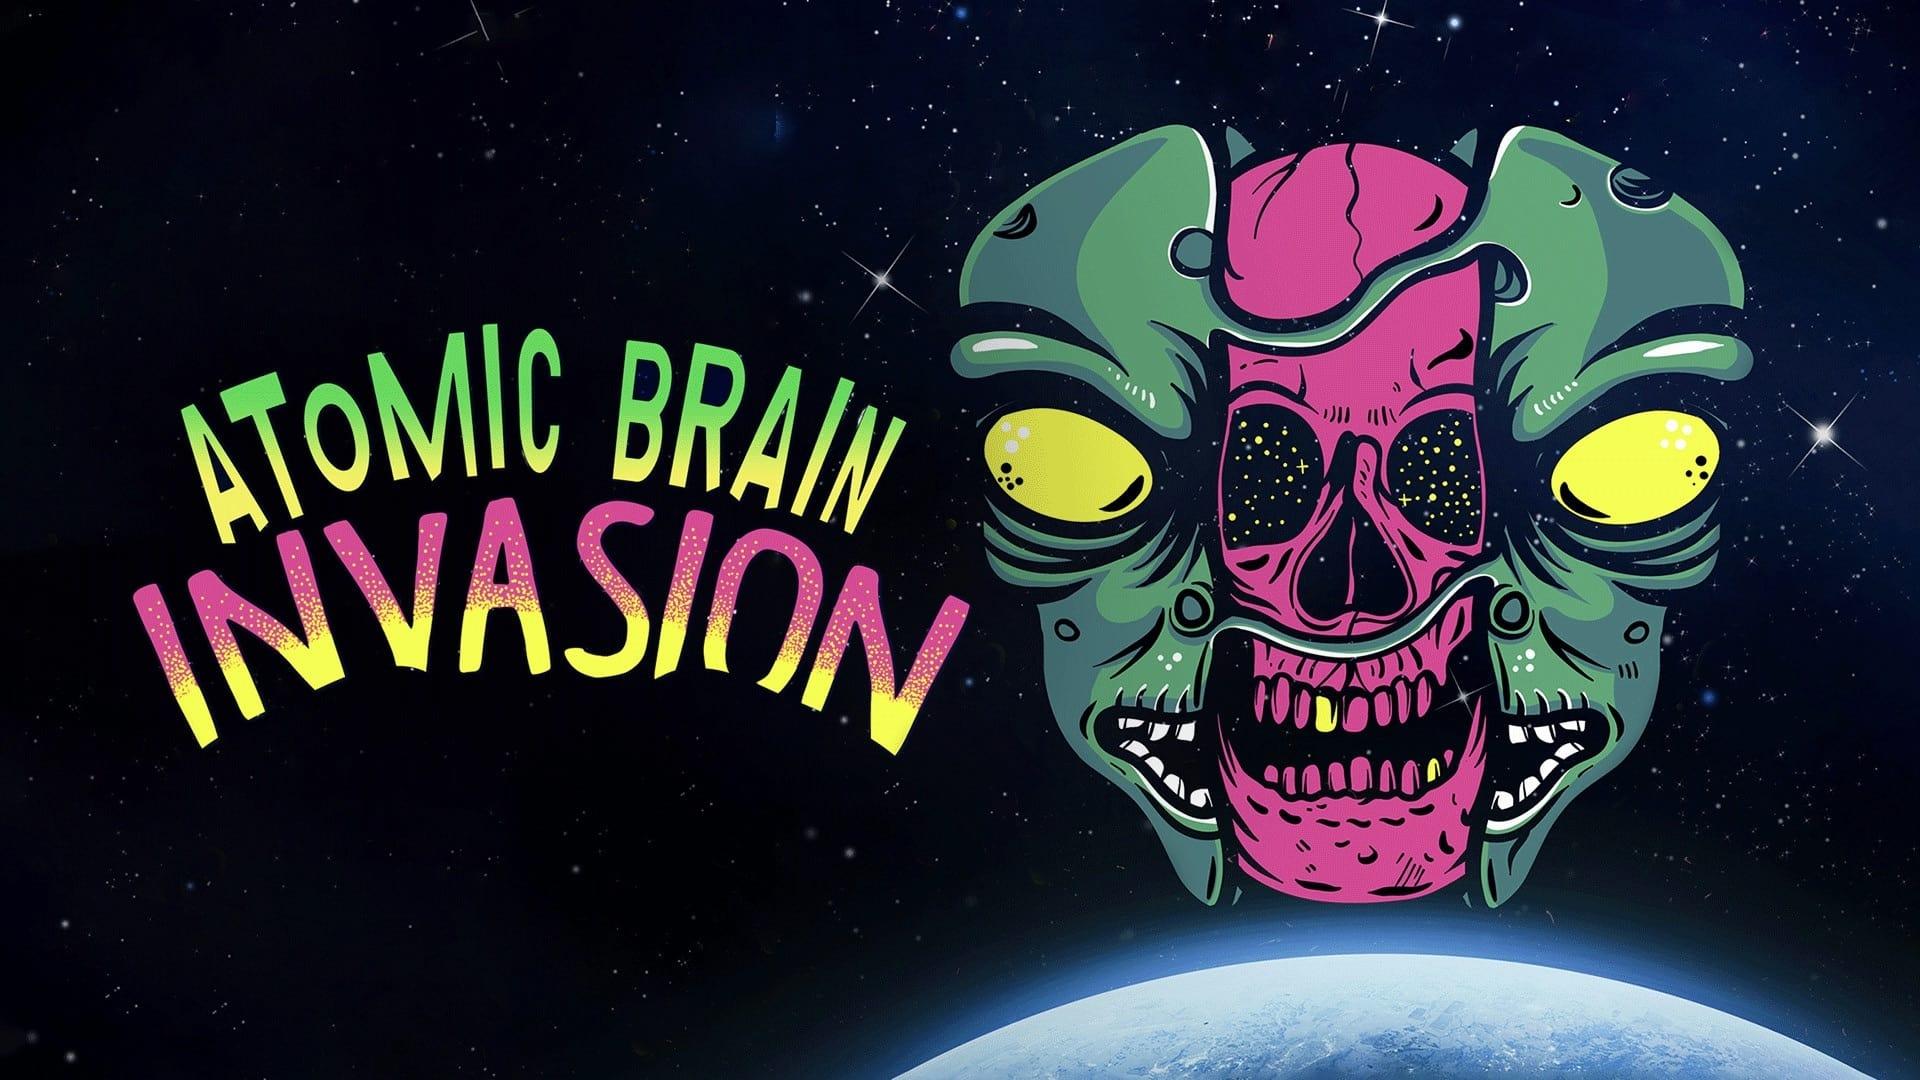 Atomic Brain Invasion backdrop